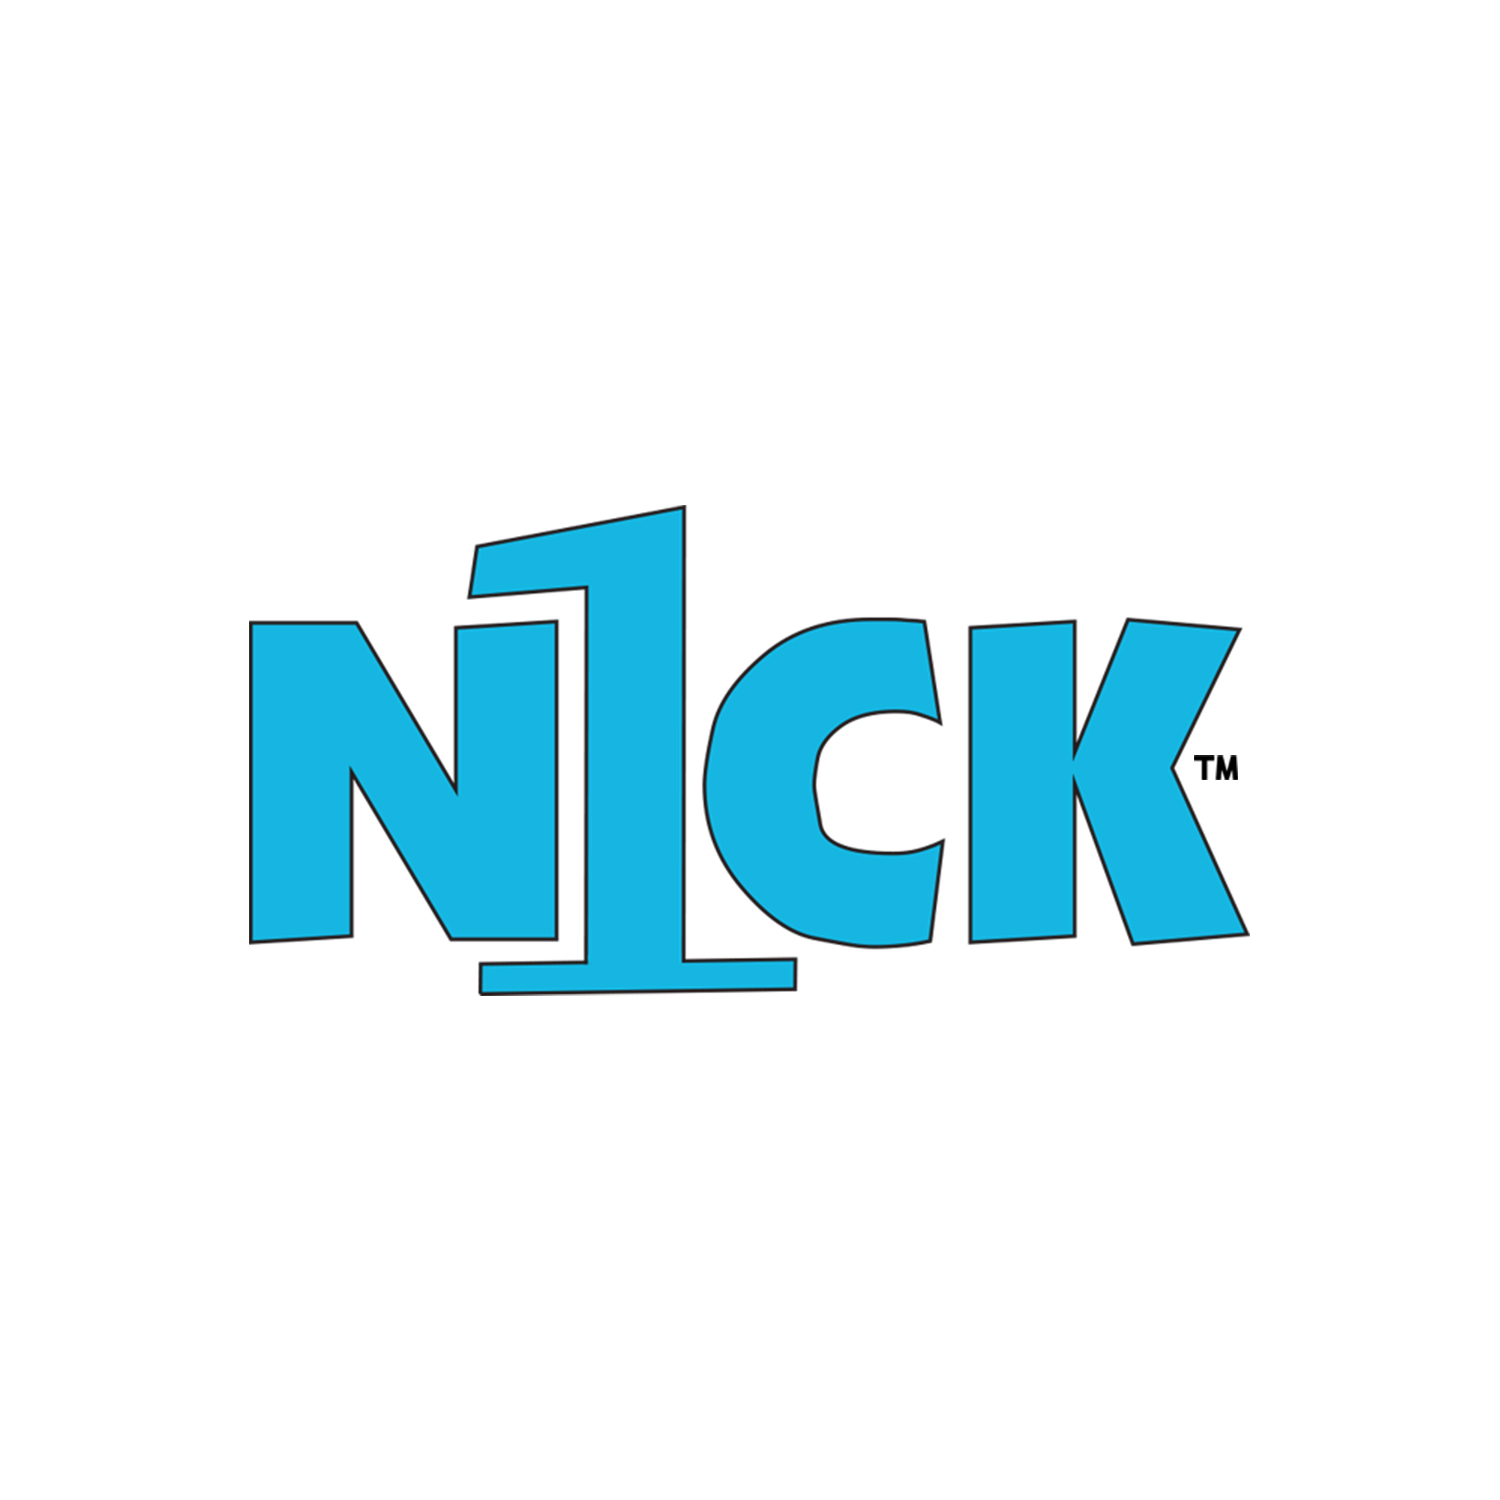 N1CK logo 1500